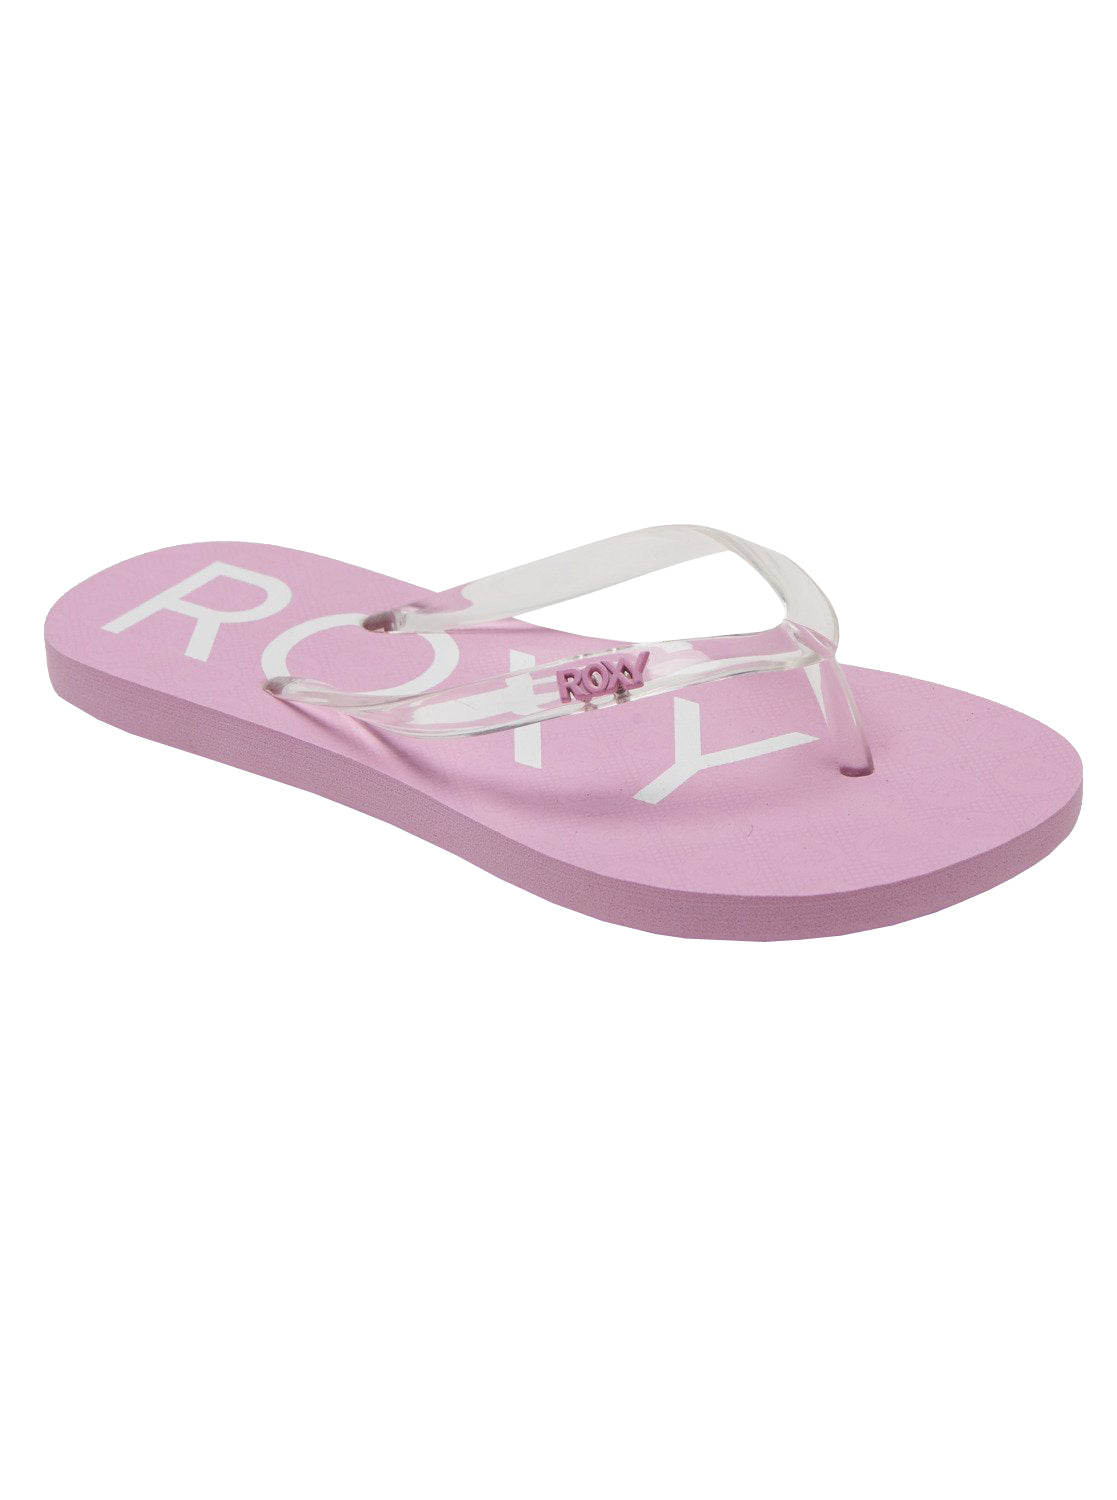 Roxy Viva Jelly Girls Sandal LRS-Lilac Rose 13 C